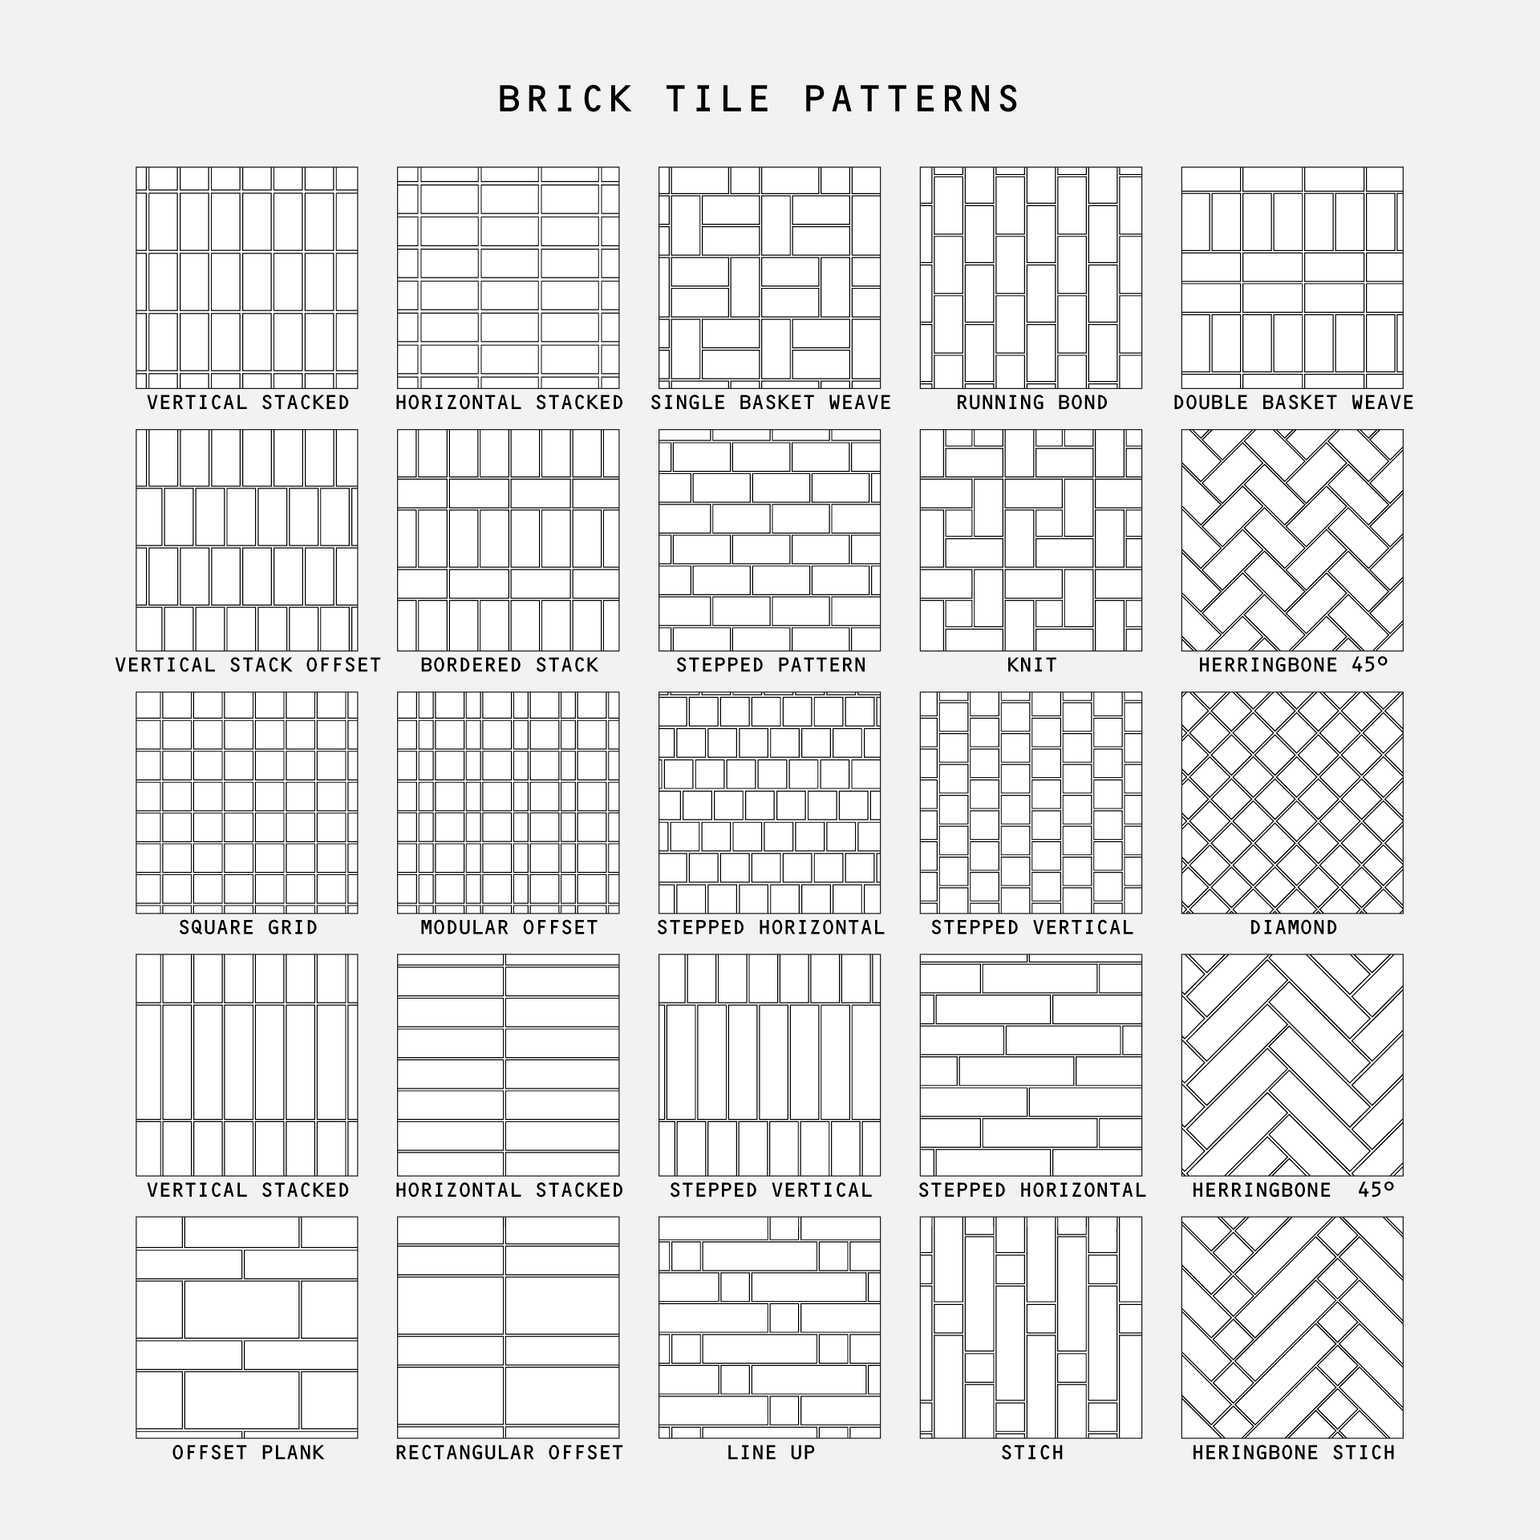 Illustrator Pattern Library - Brick Tile Patterns | Post Digital ...